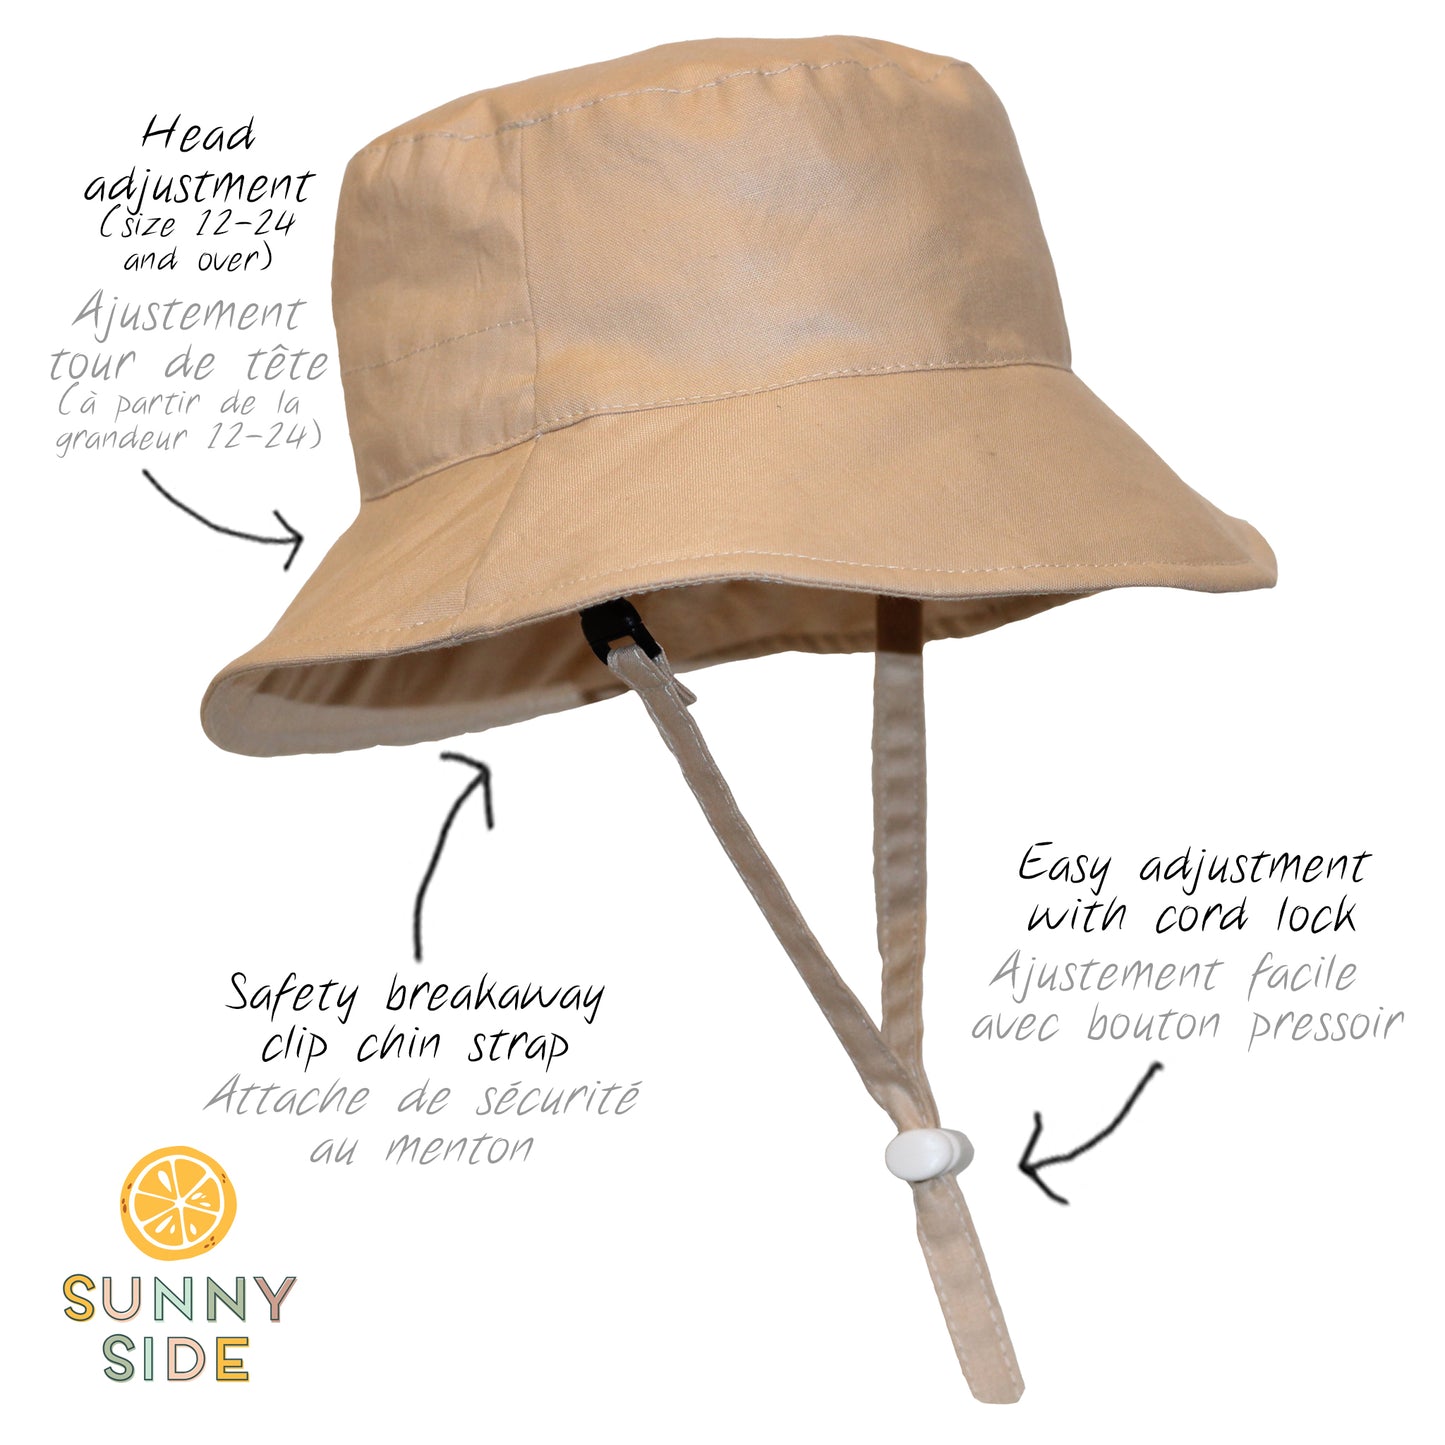 Bucket hat : offers UPF 50+ sun protection